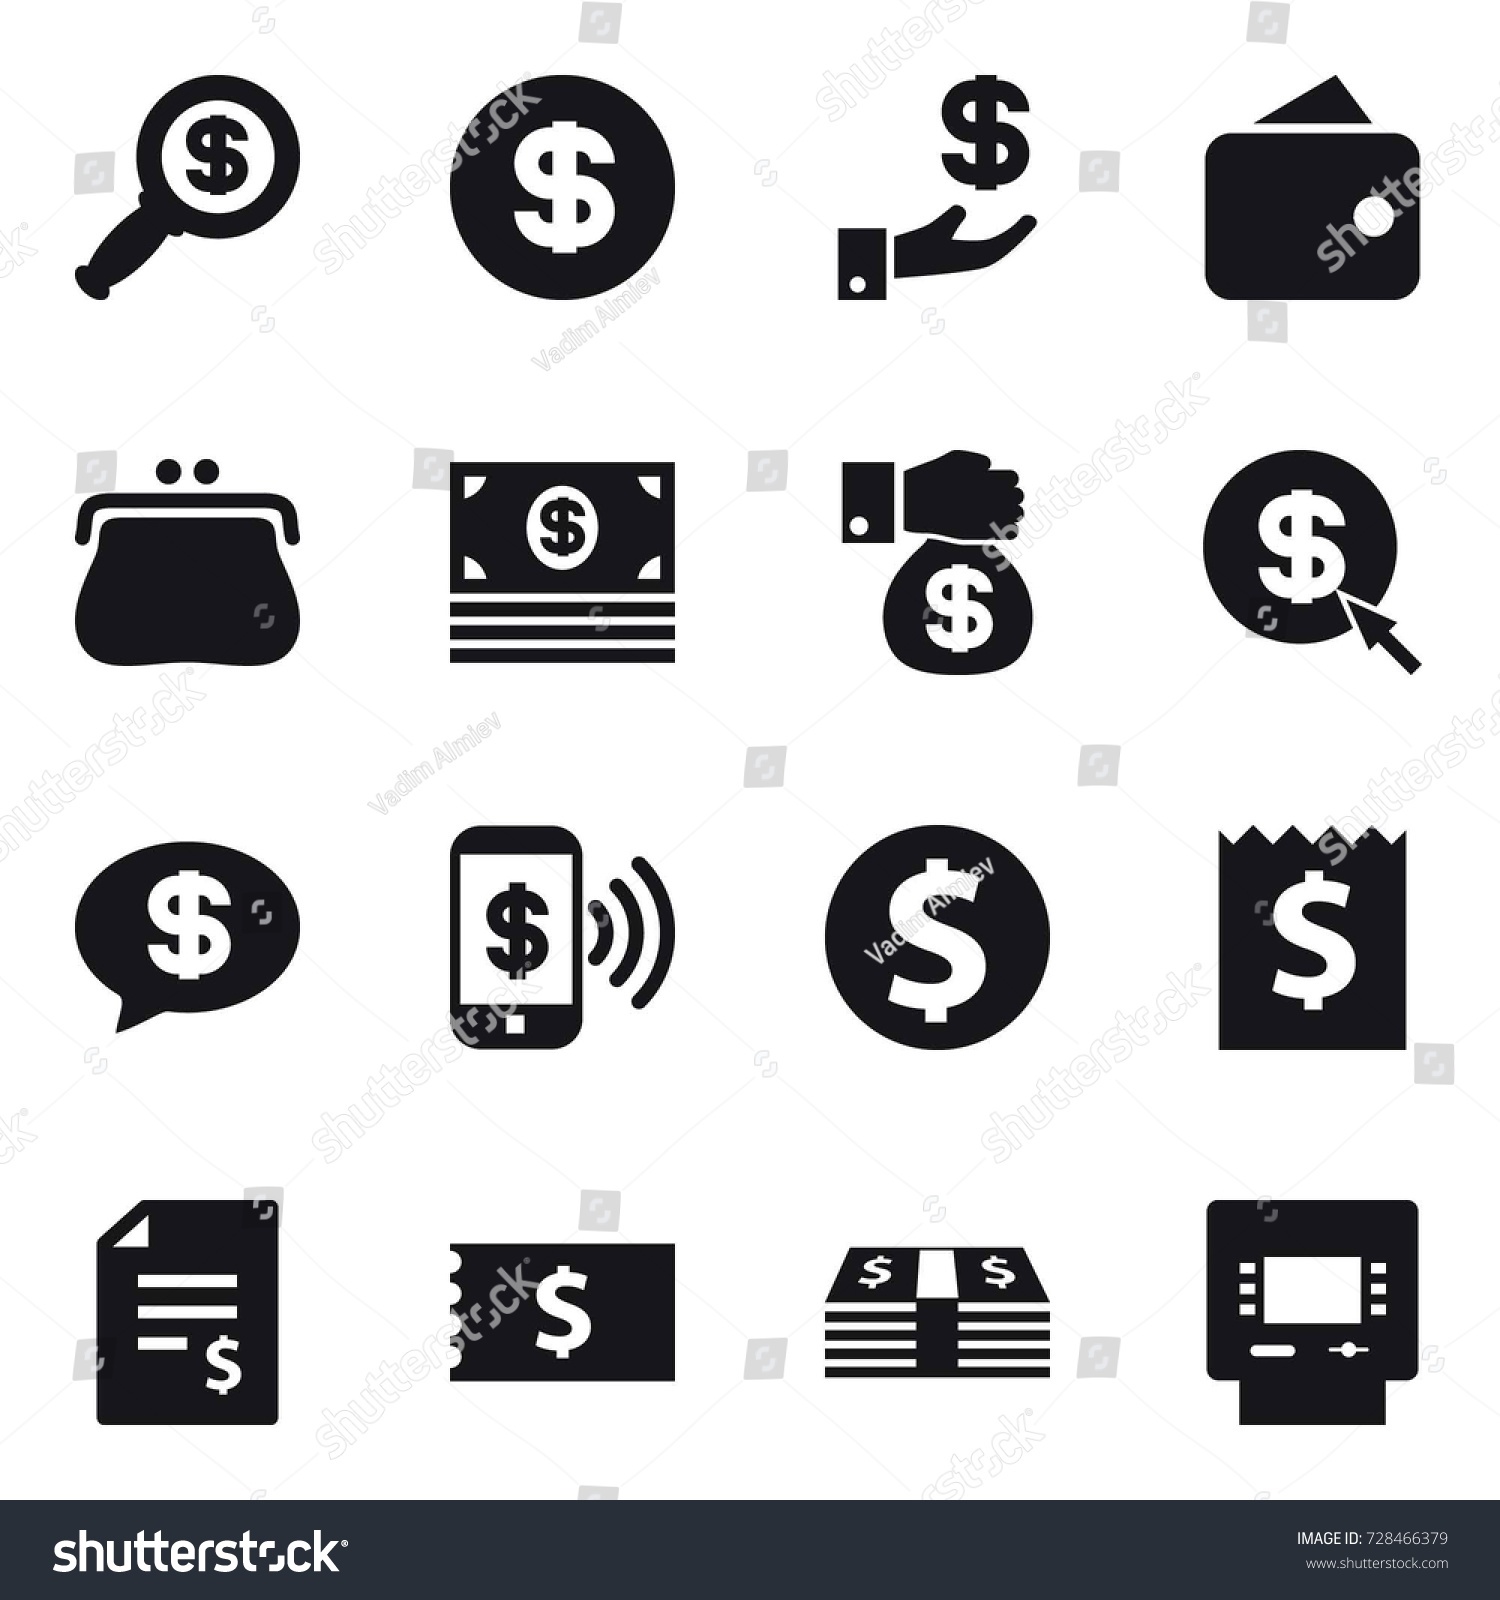 16 vector icon set : dollar magnifier, dollar, investment, wallet, purse, money, money gift, dollar arrow, money message, phone pay, dollar coin, receipt, account balance, atm #728466379